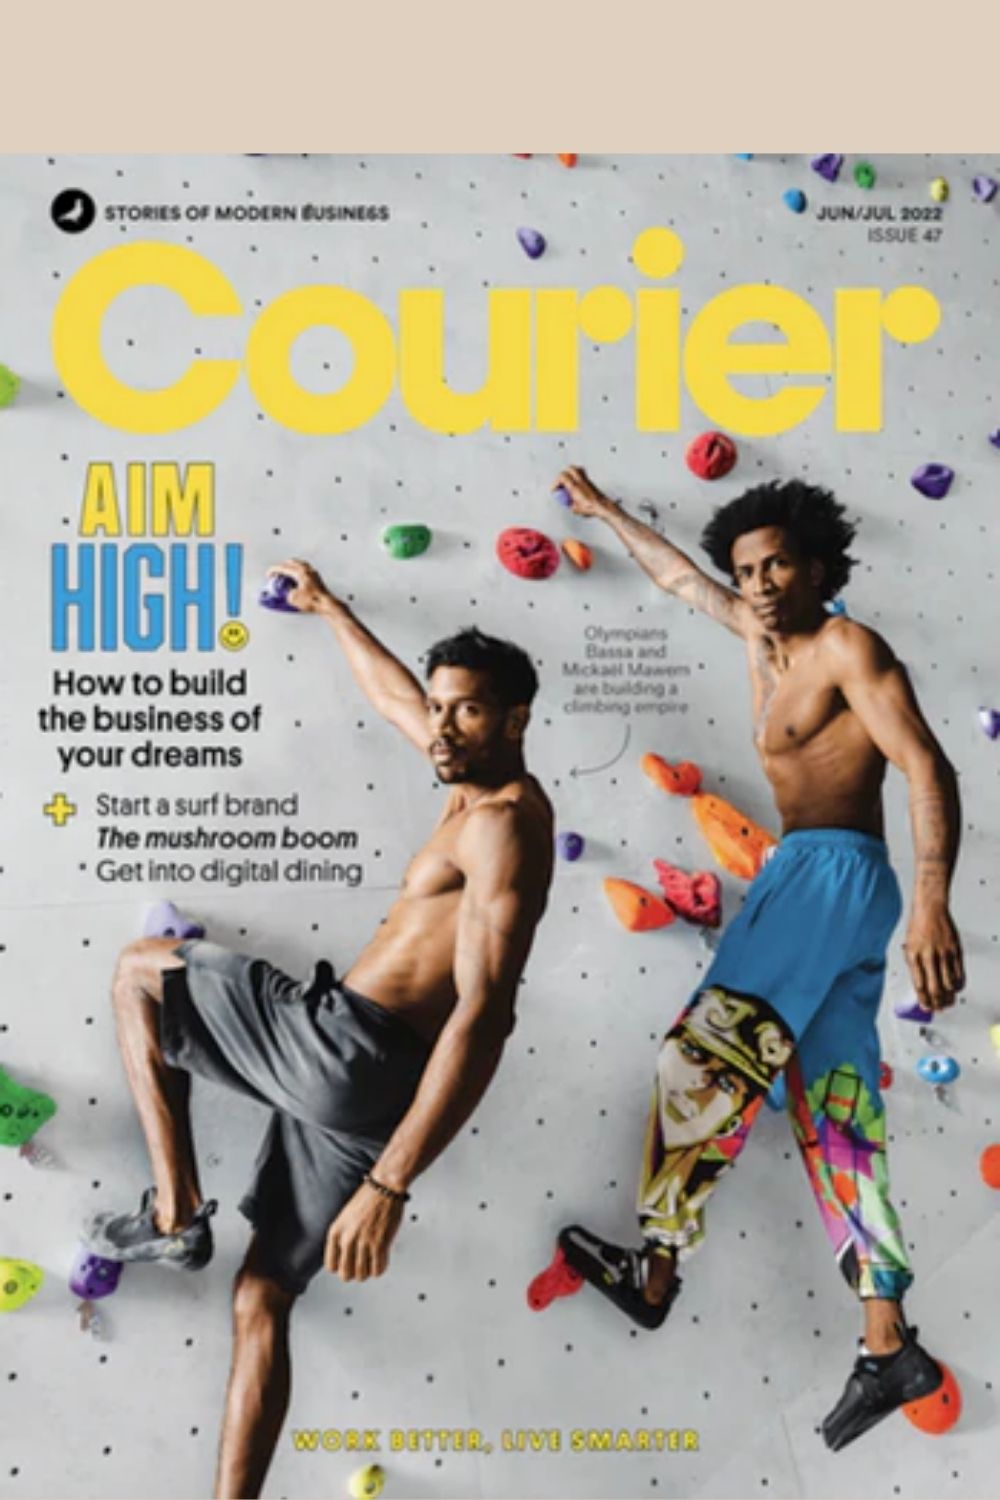 Courier Magazine Issue 47